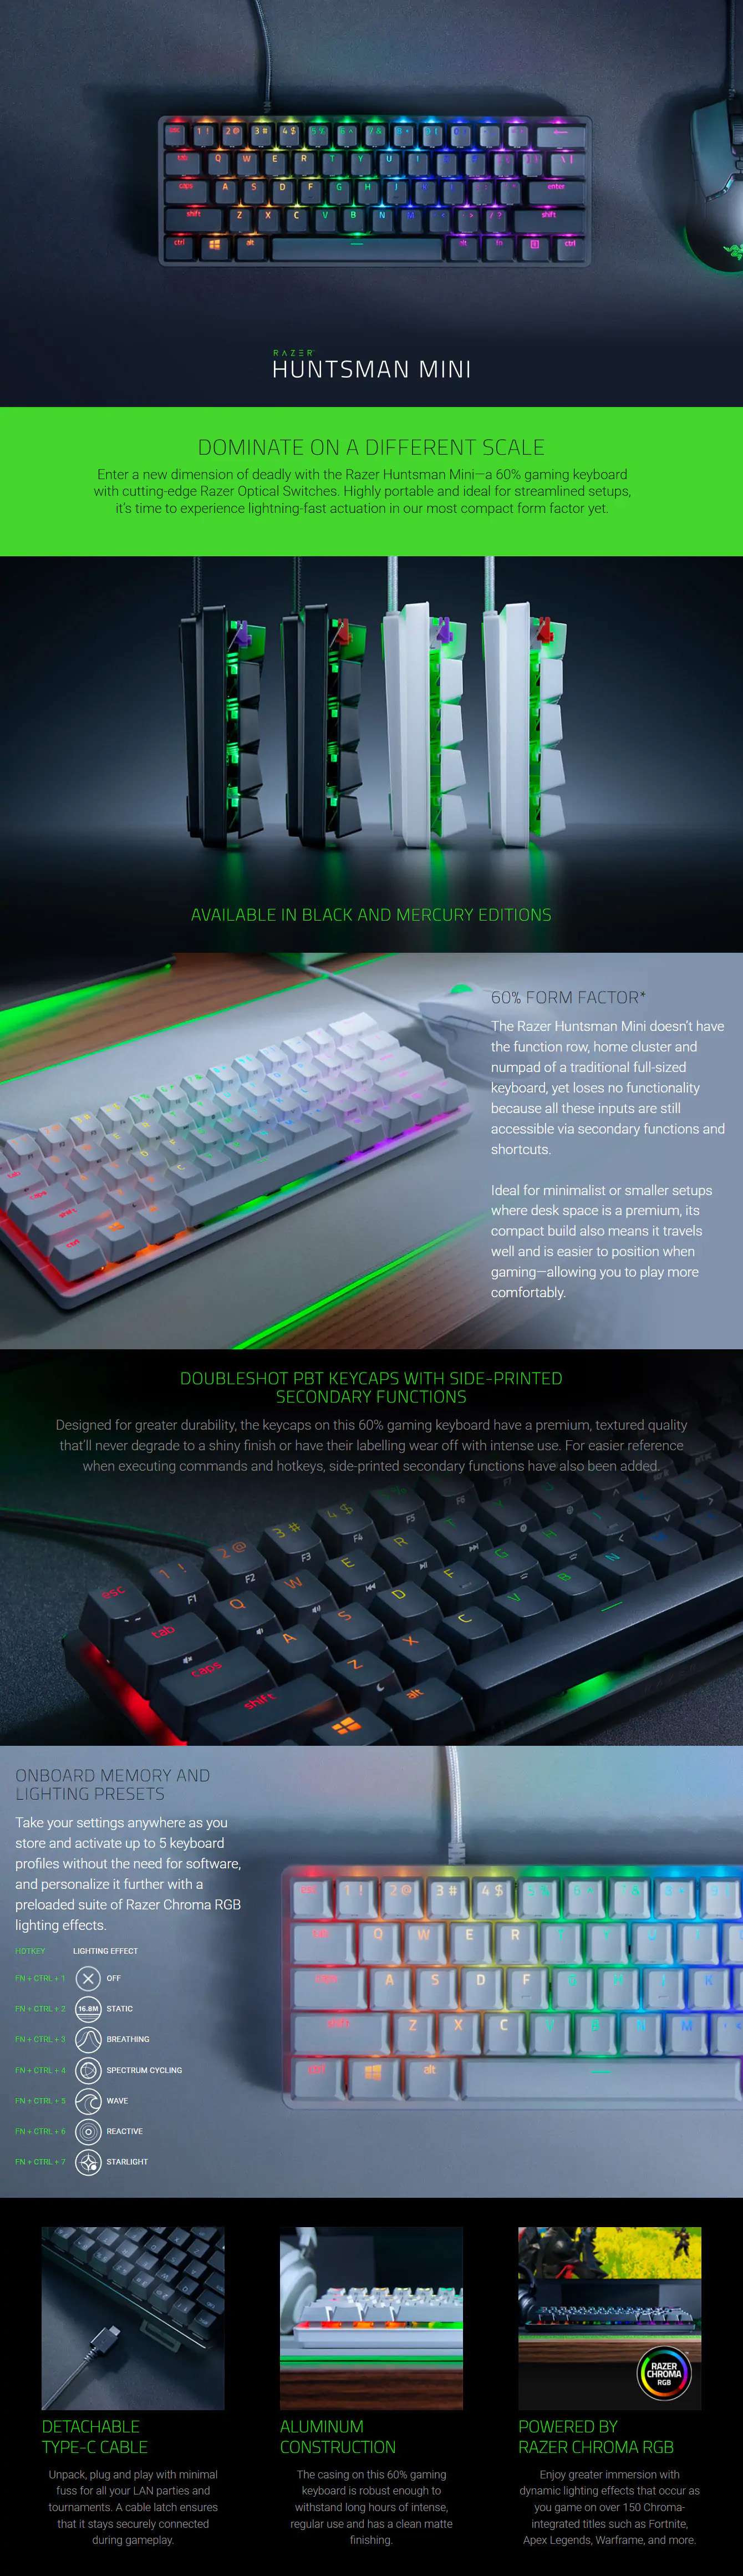 Keyboards-Razer-Hunstman-Mini-60-RGB-Wired-Gaming-Keyboard-Black-Linear-Optical-Switch-Red-8